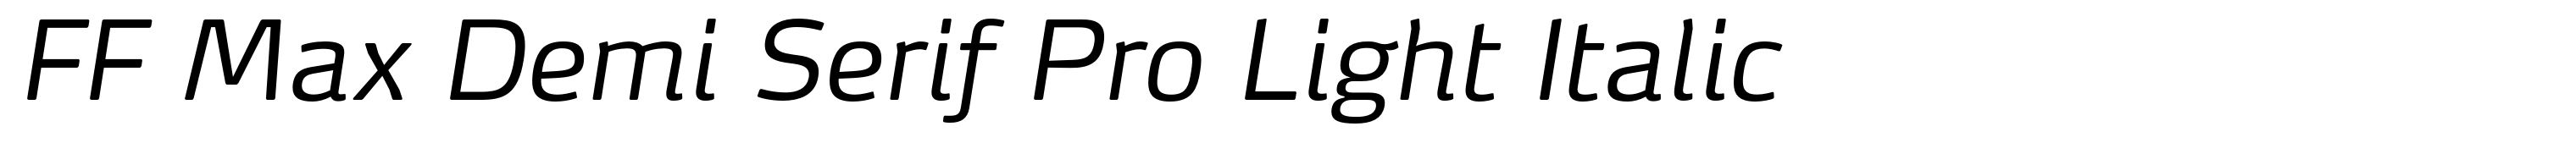 FF Max Demi Serif Pro Light Italic